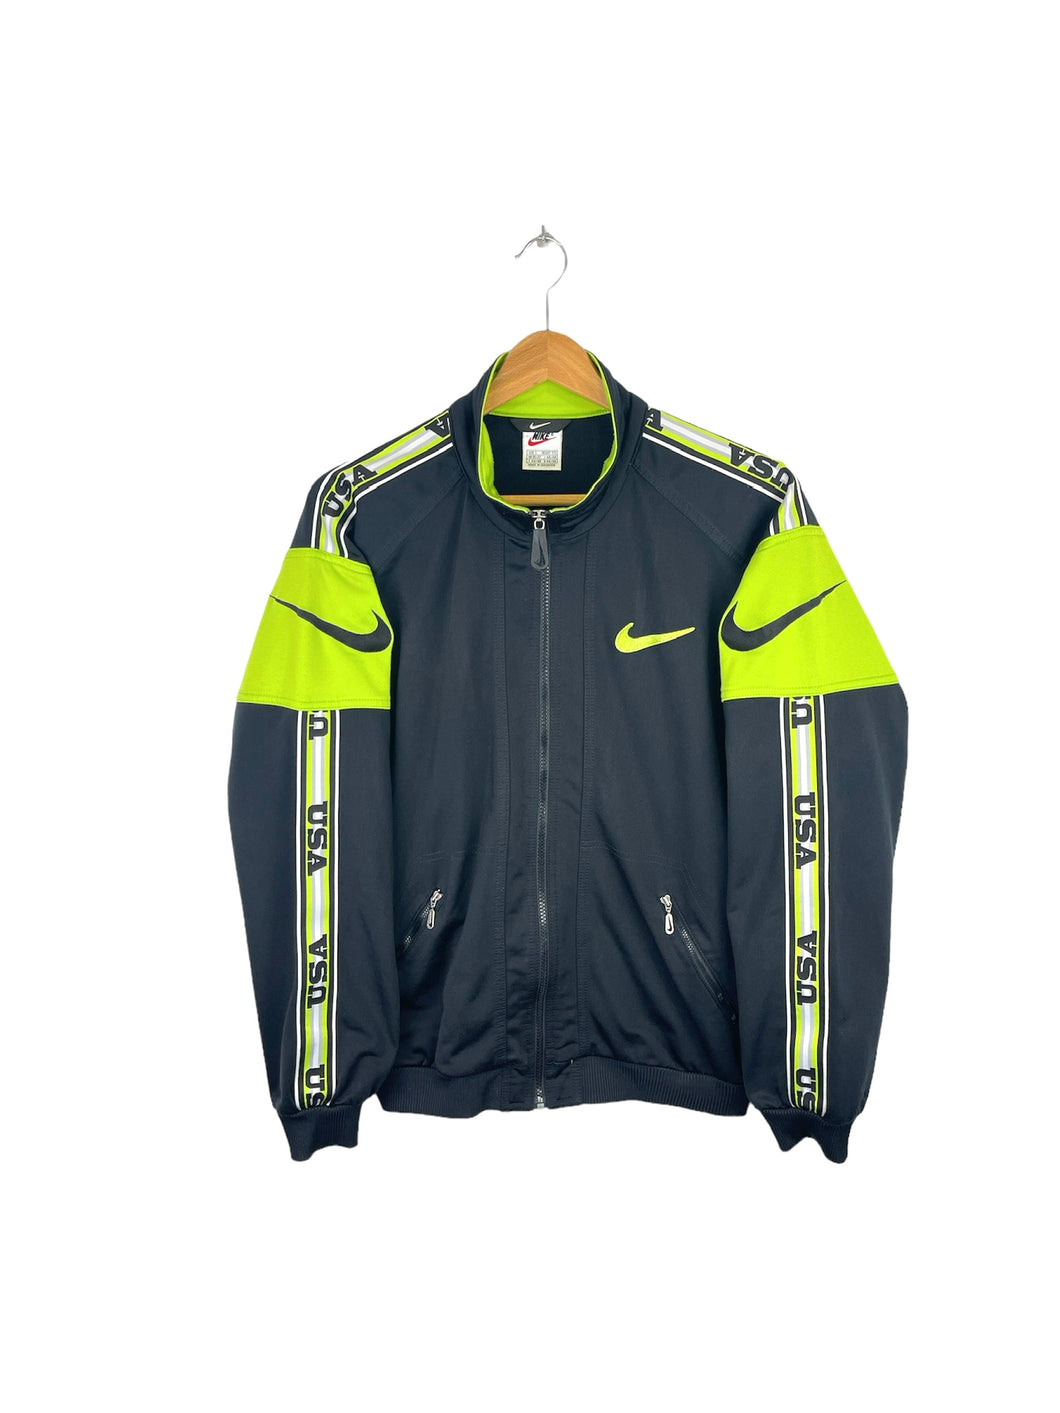 Nike USA Jacket - Small